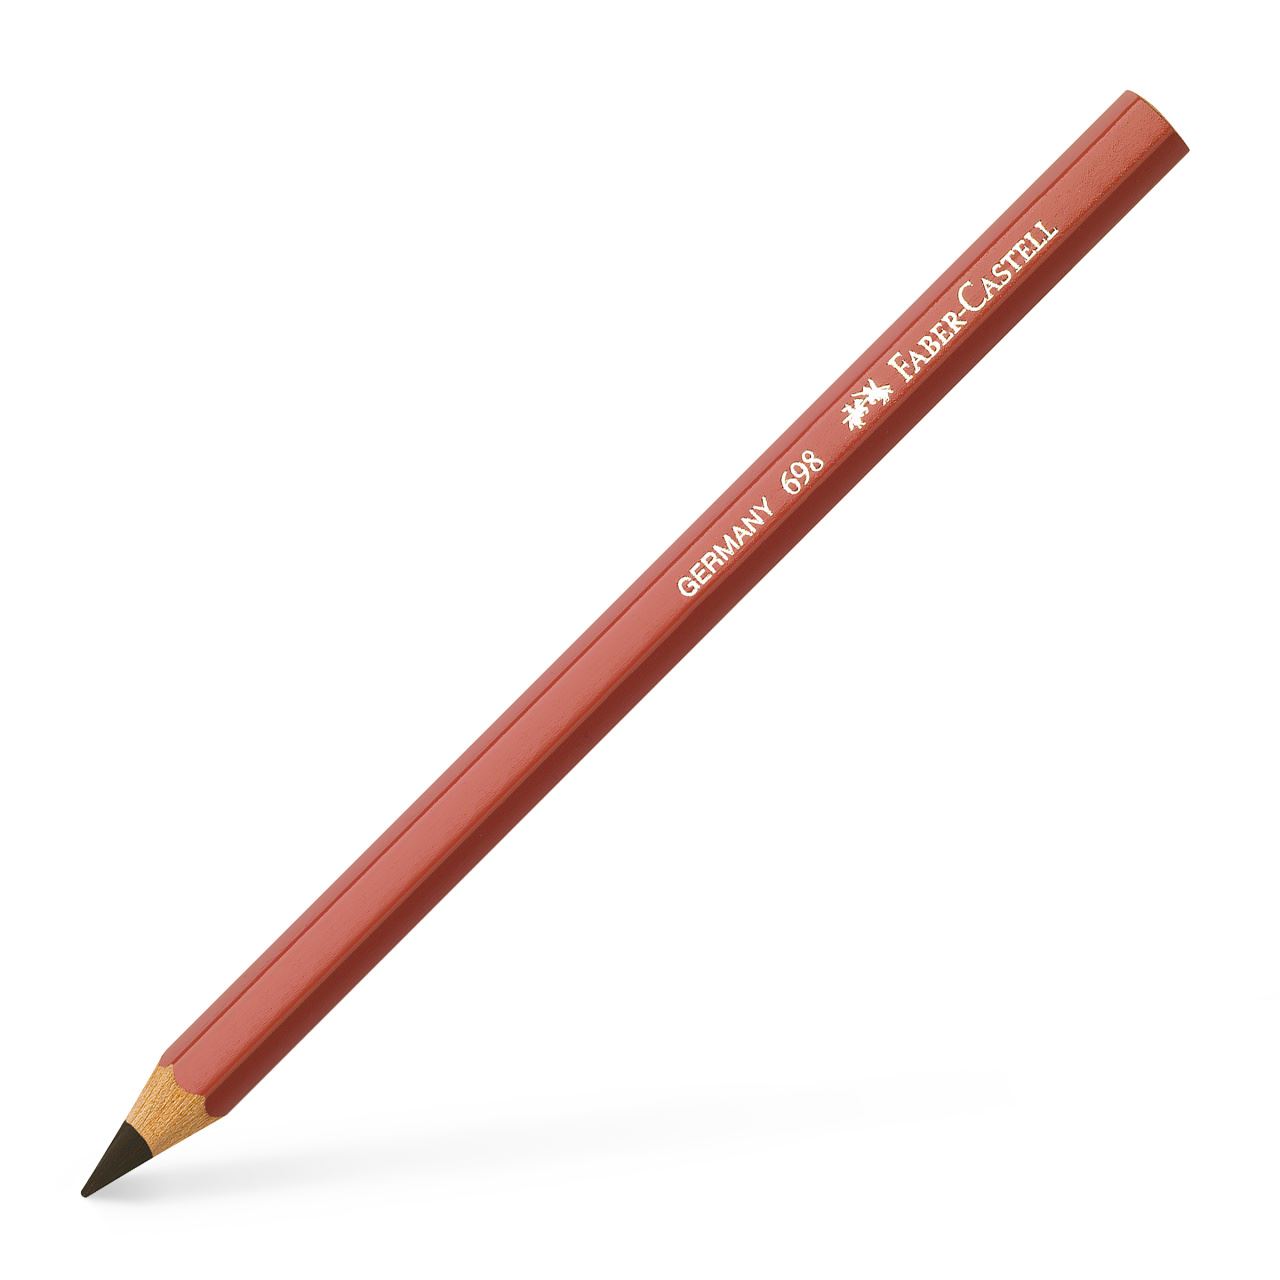 Faber-Castell - Crayon viande 698 brun